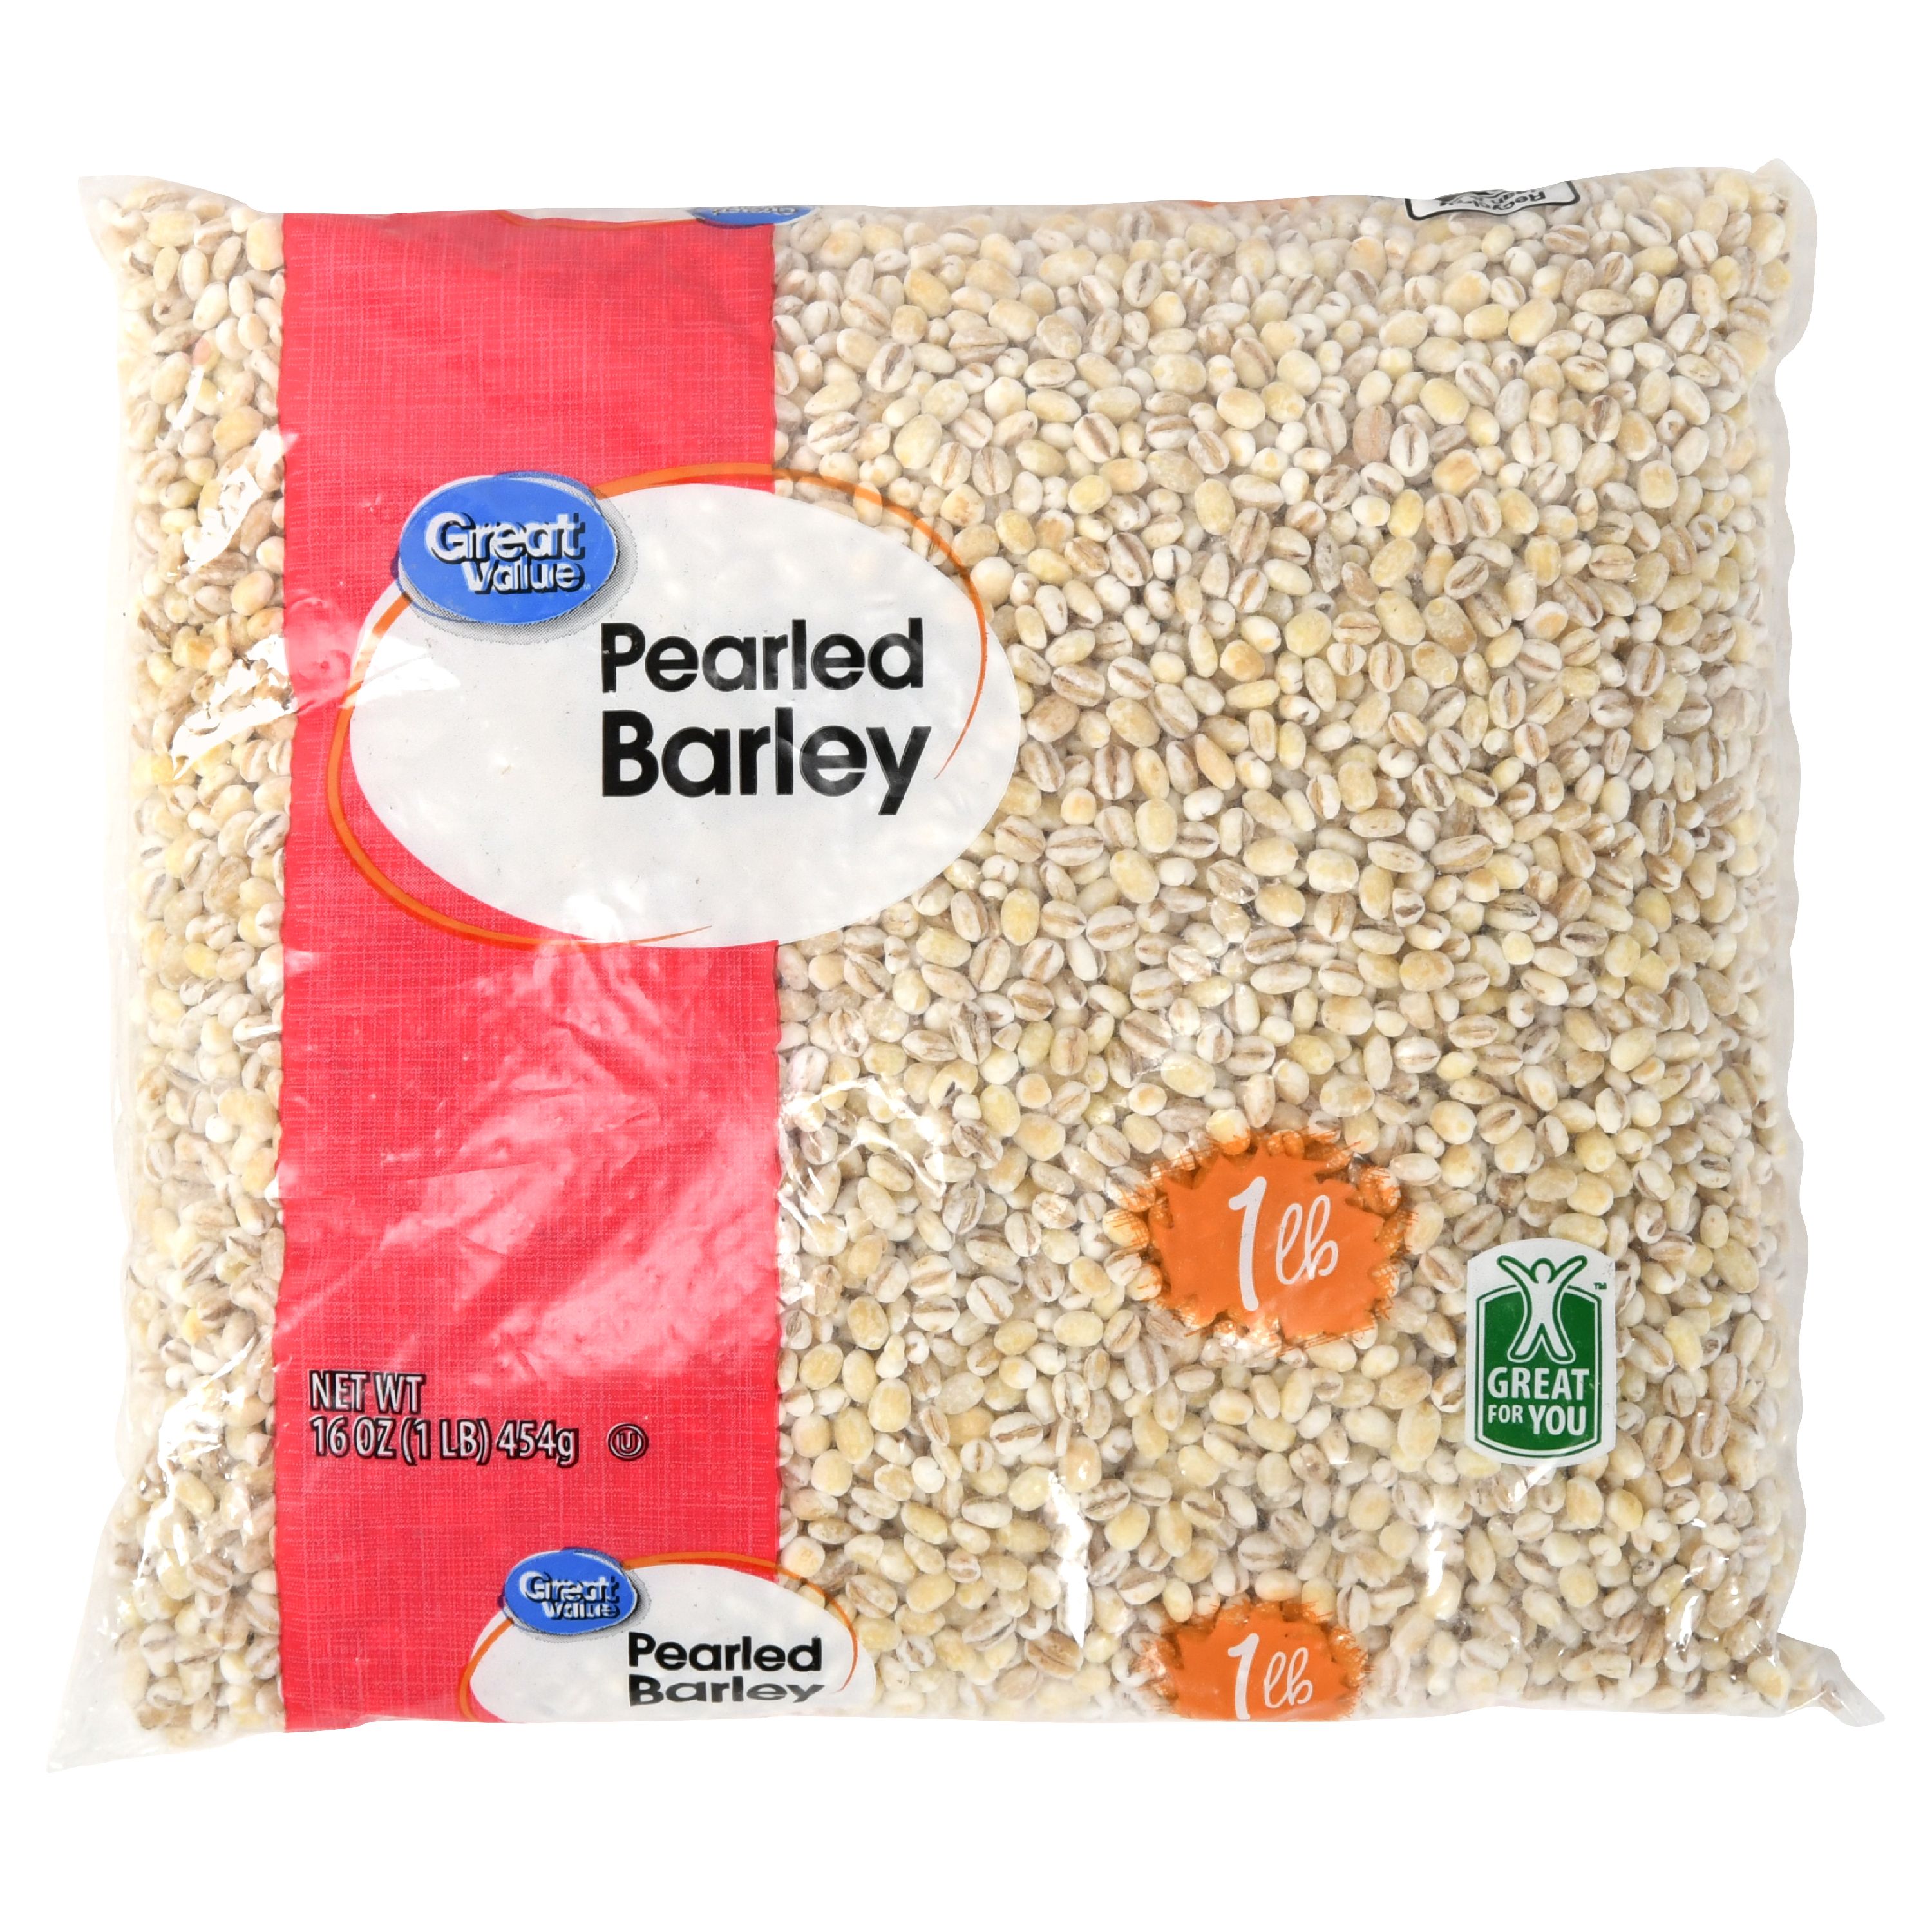 Great Value Pearled Barley, 16 Oz